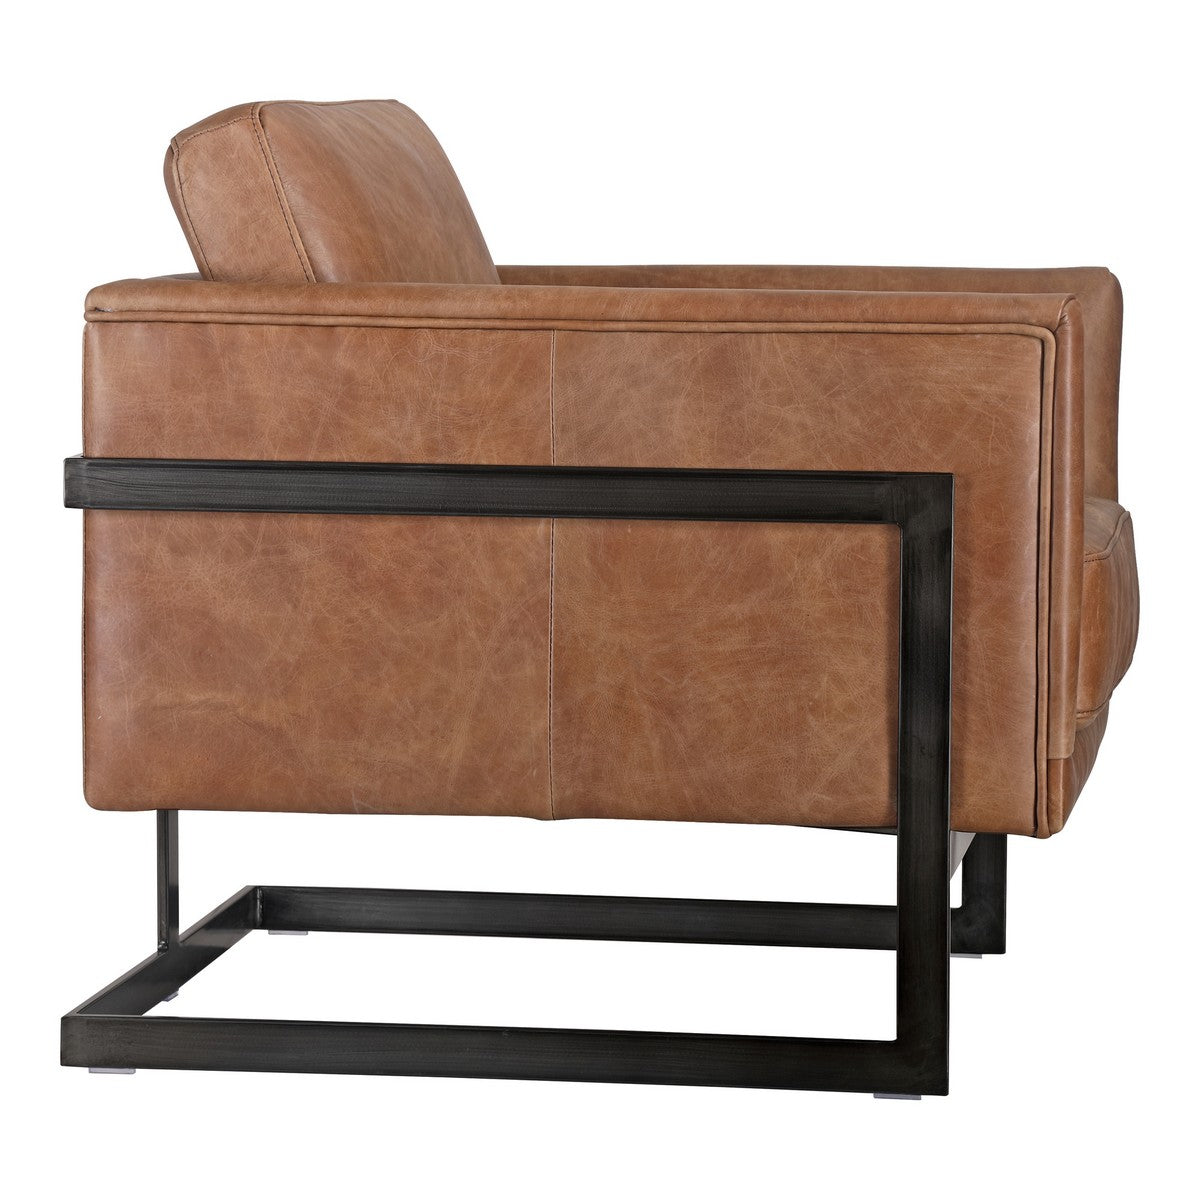 Moe's Home Collection Luxley Club Chair Cappuccino - PK-1082-14